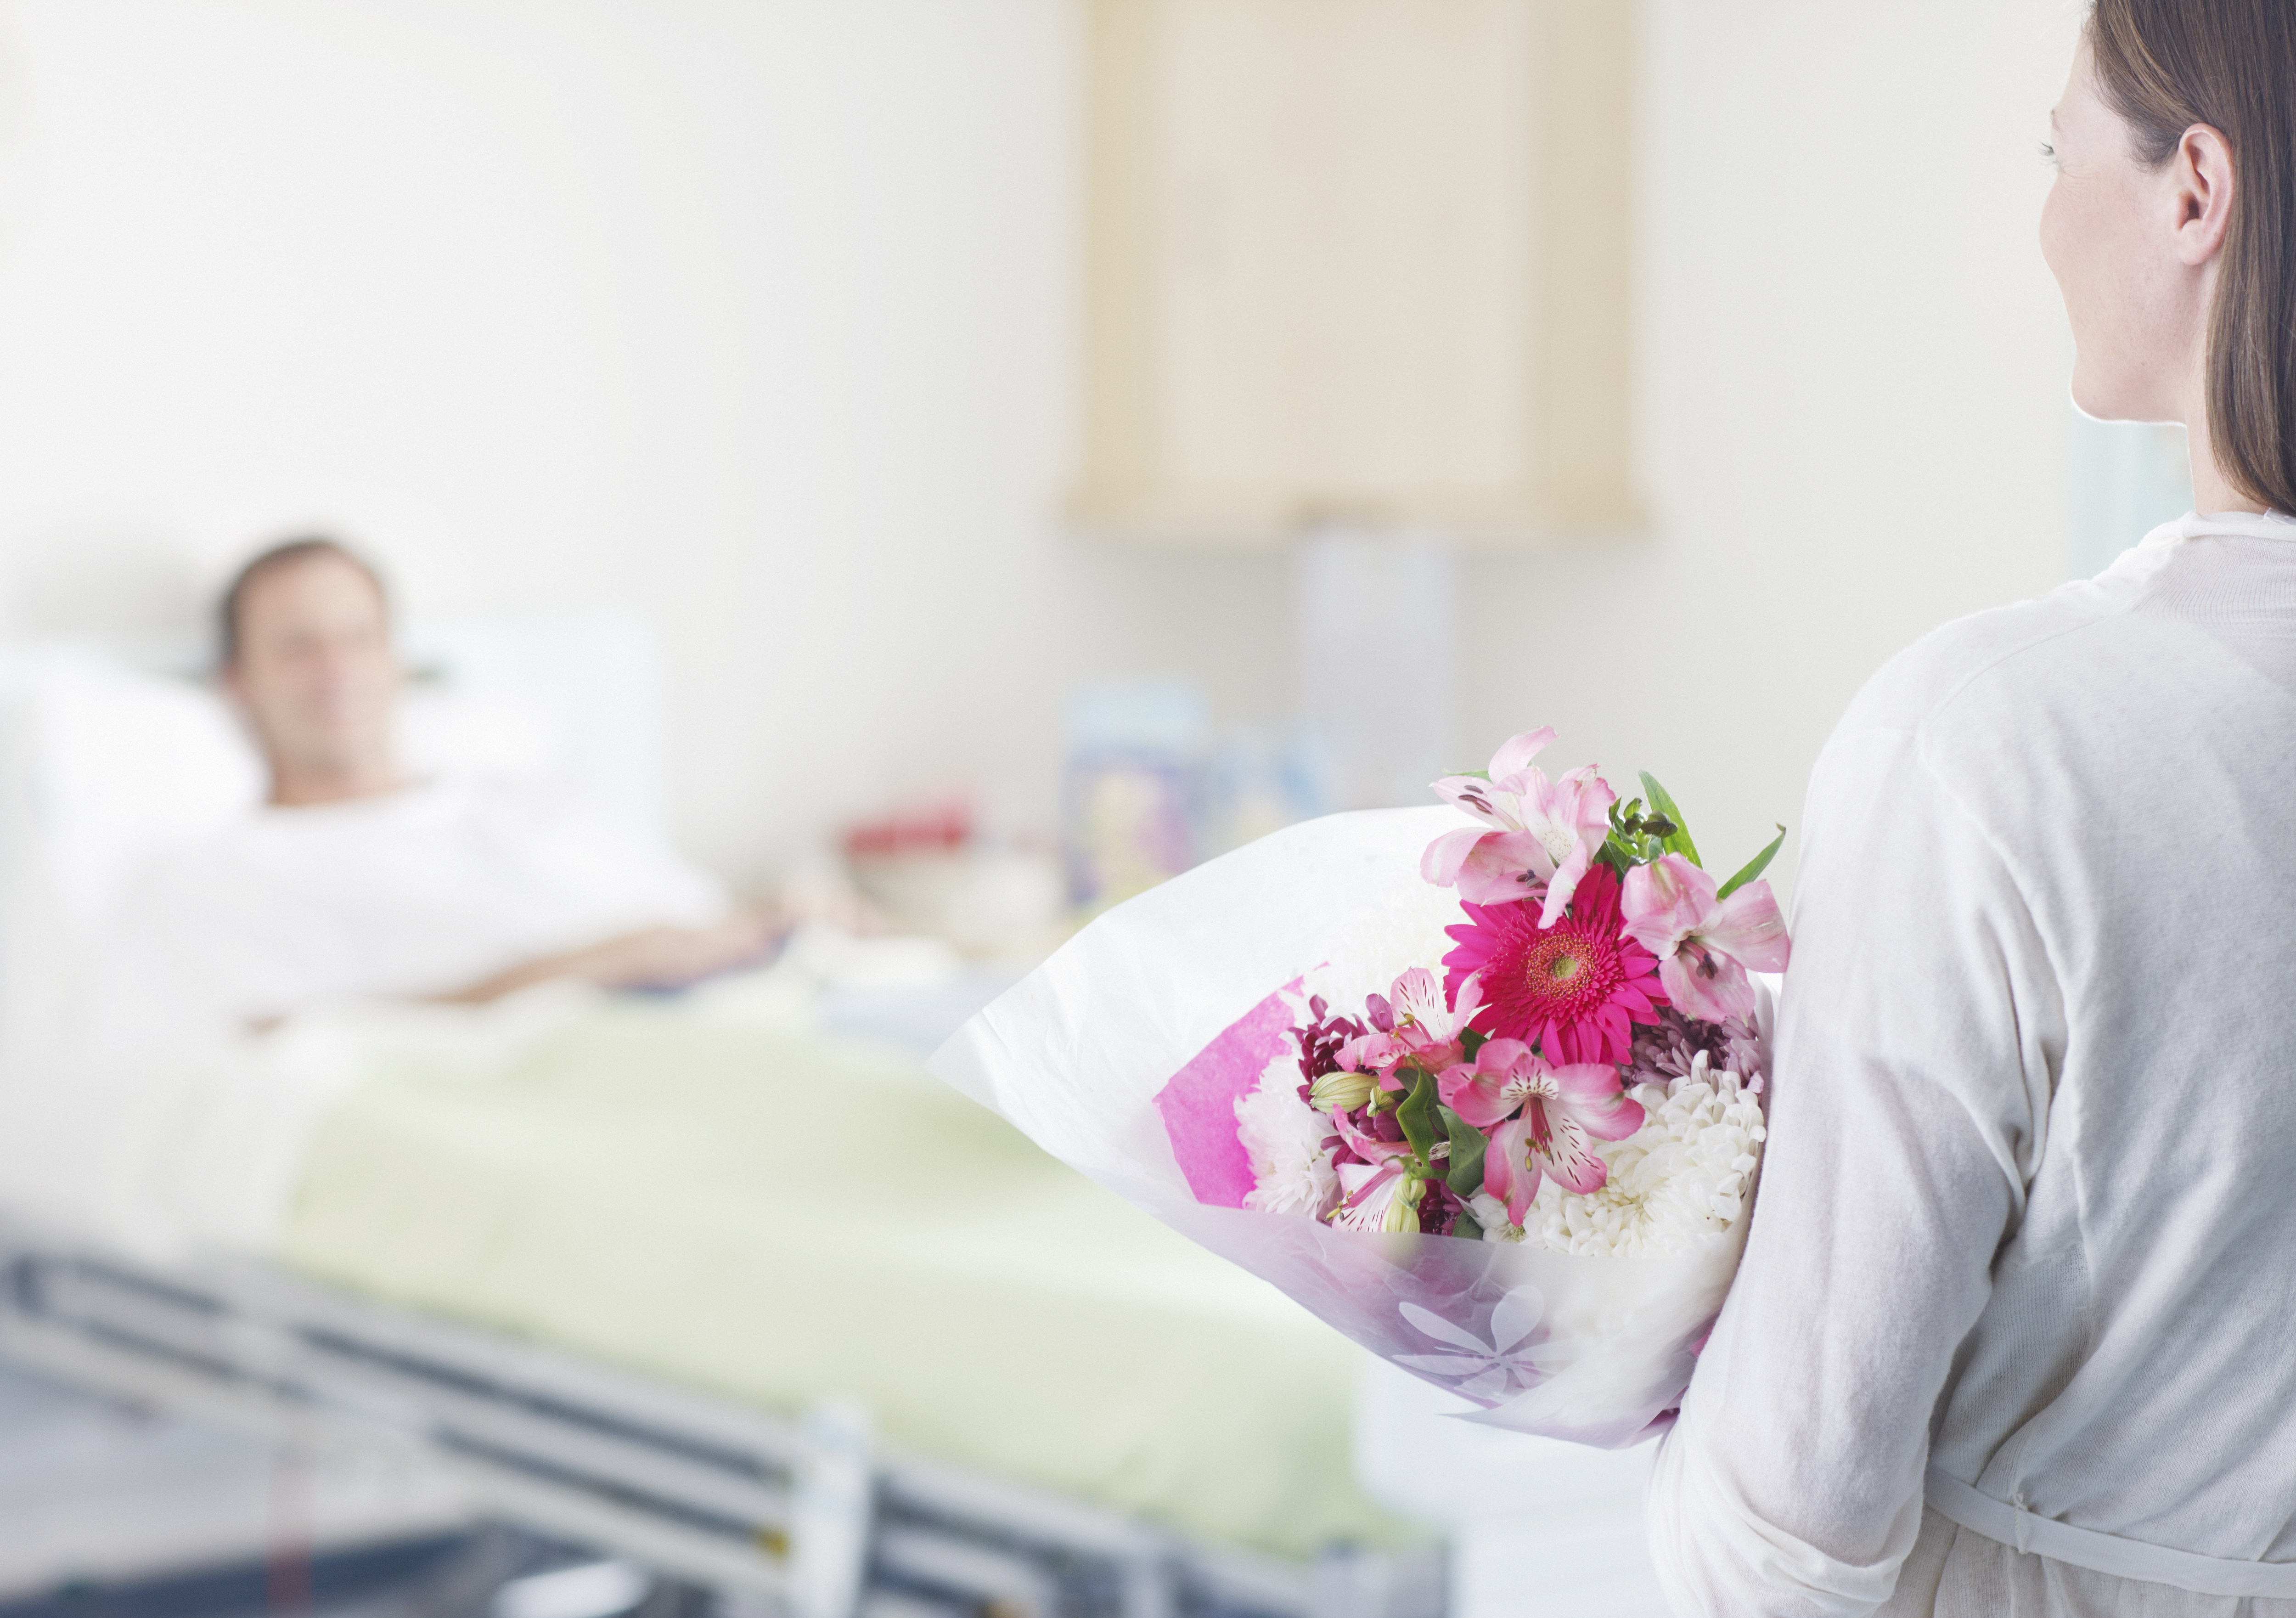 Una mujer lleva flores a un hombre en un hospital | Foto: Getty Images